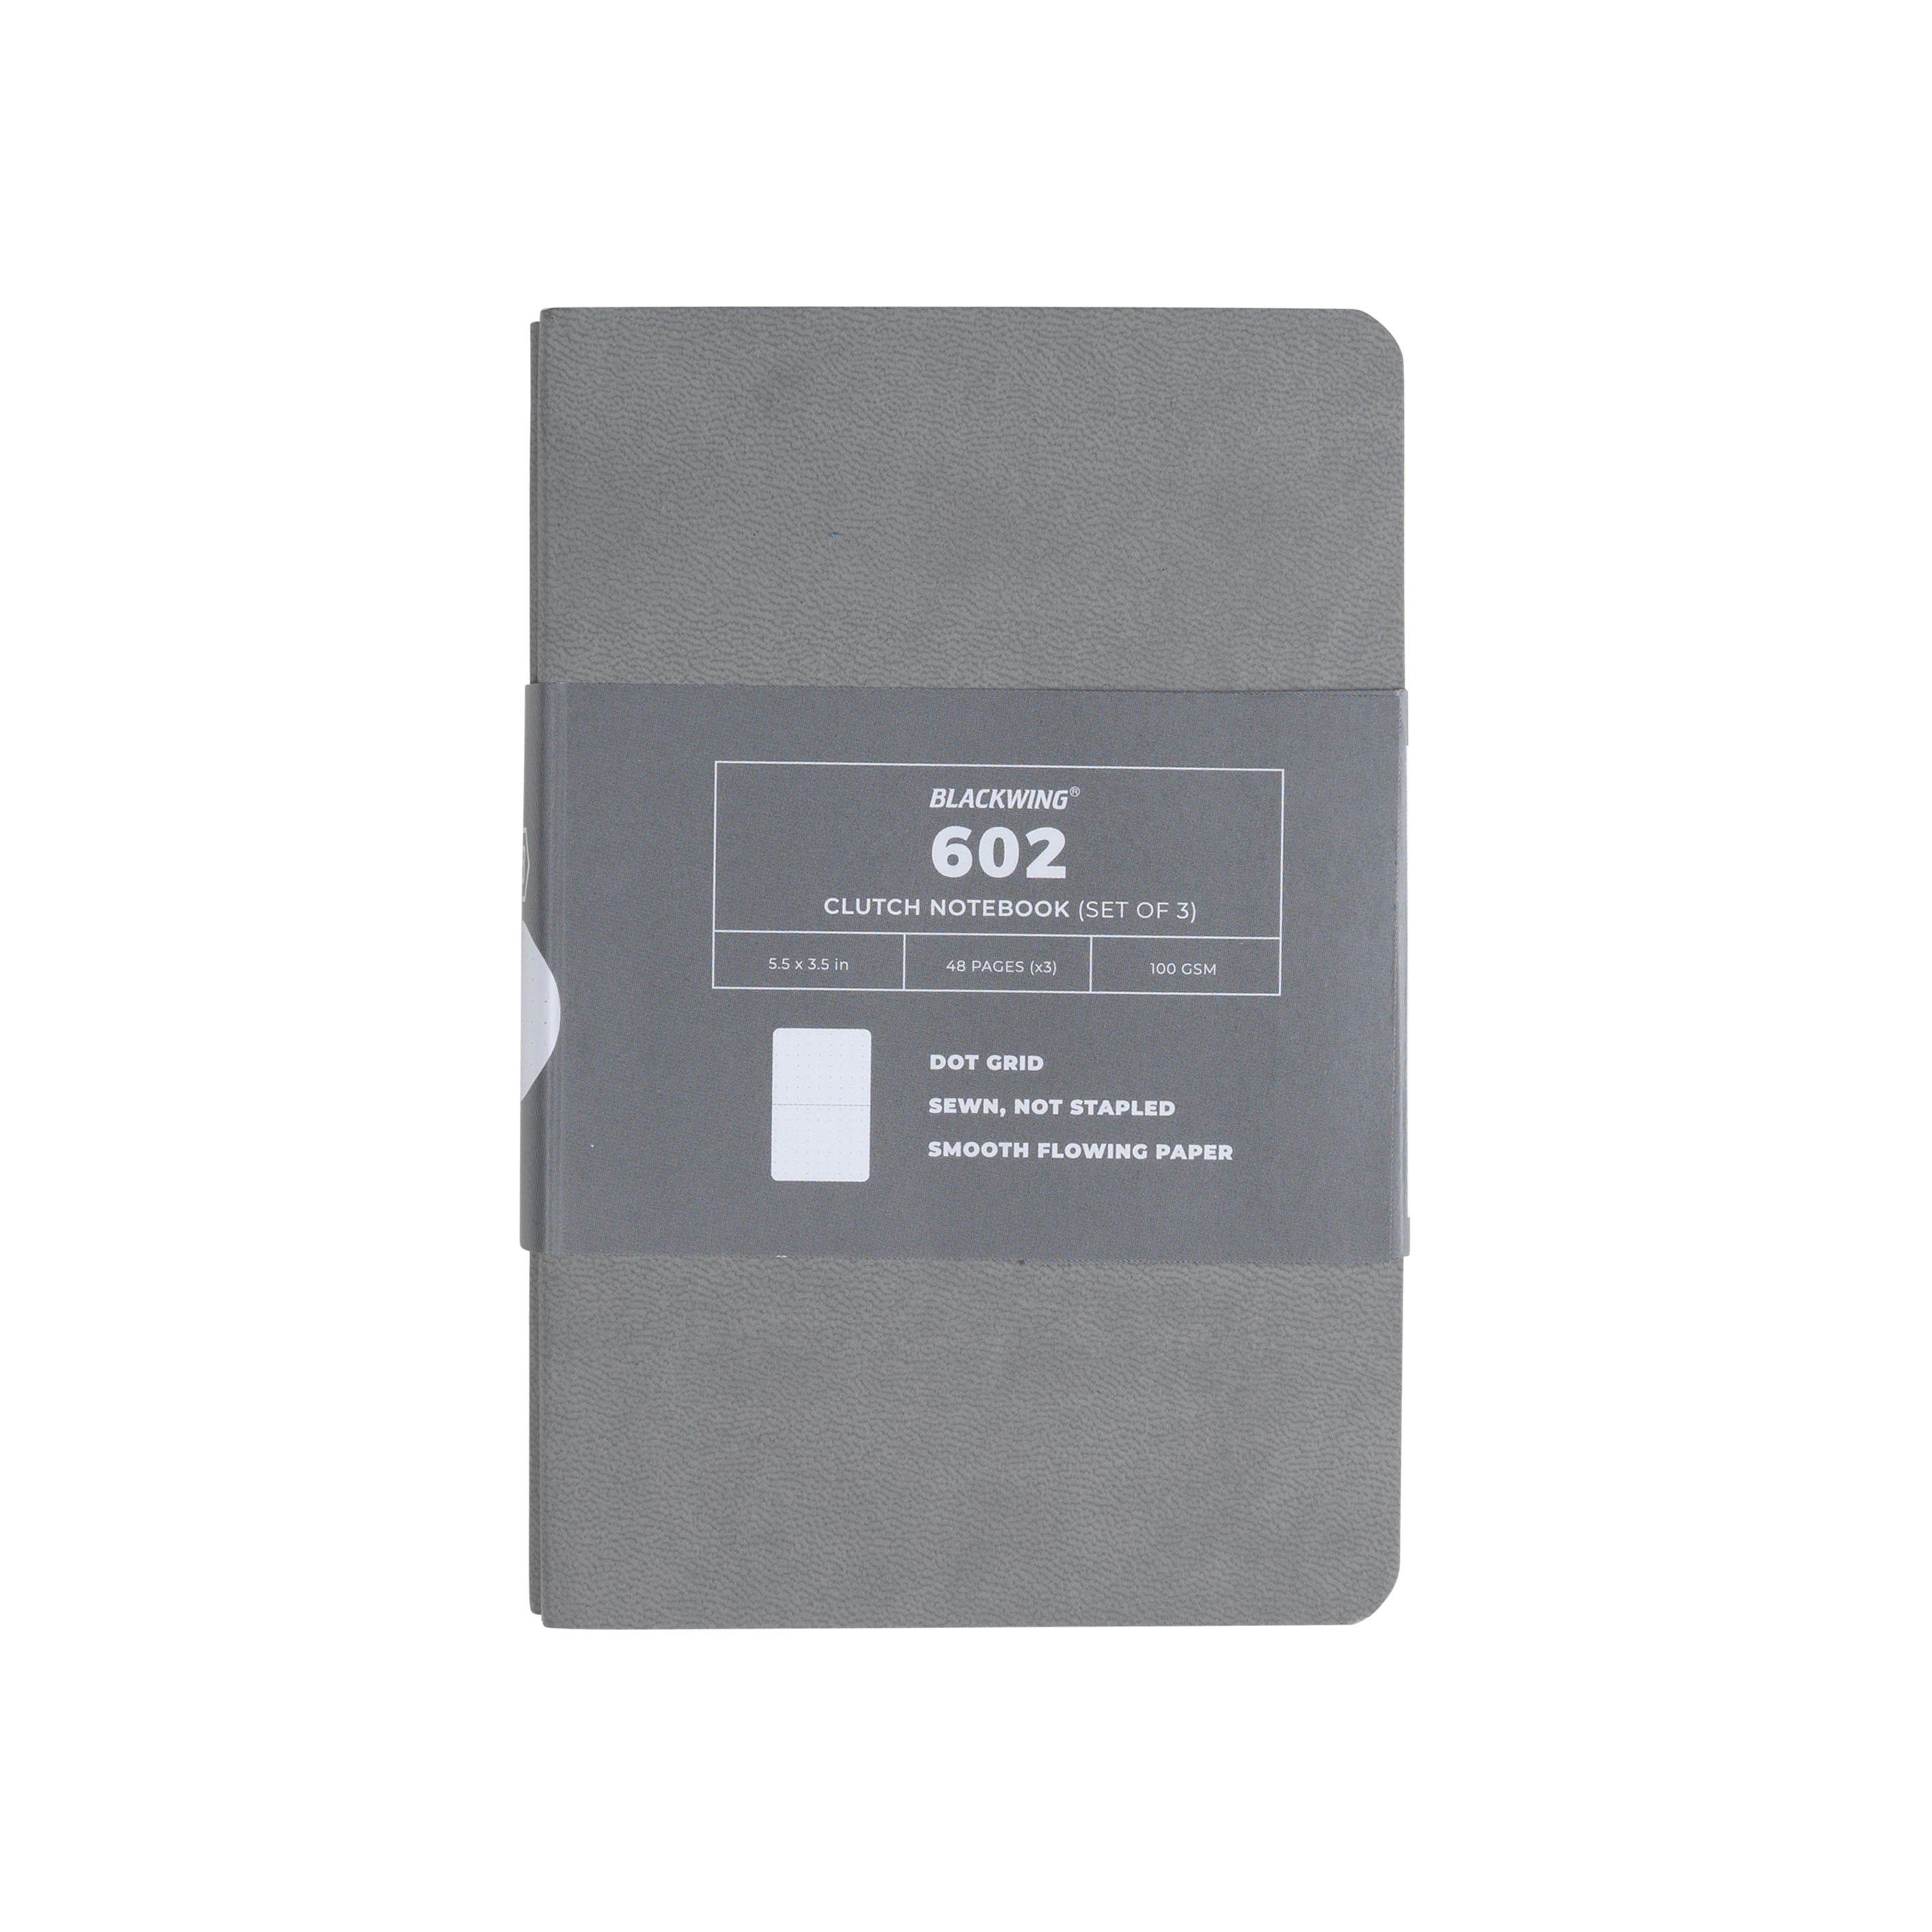 Blackwing 602 Clutch Notebook - Dot Grid Paper